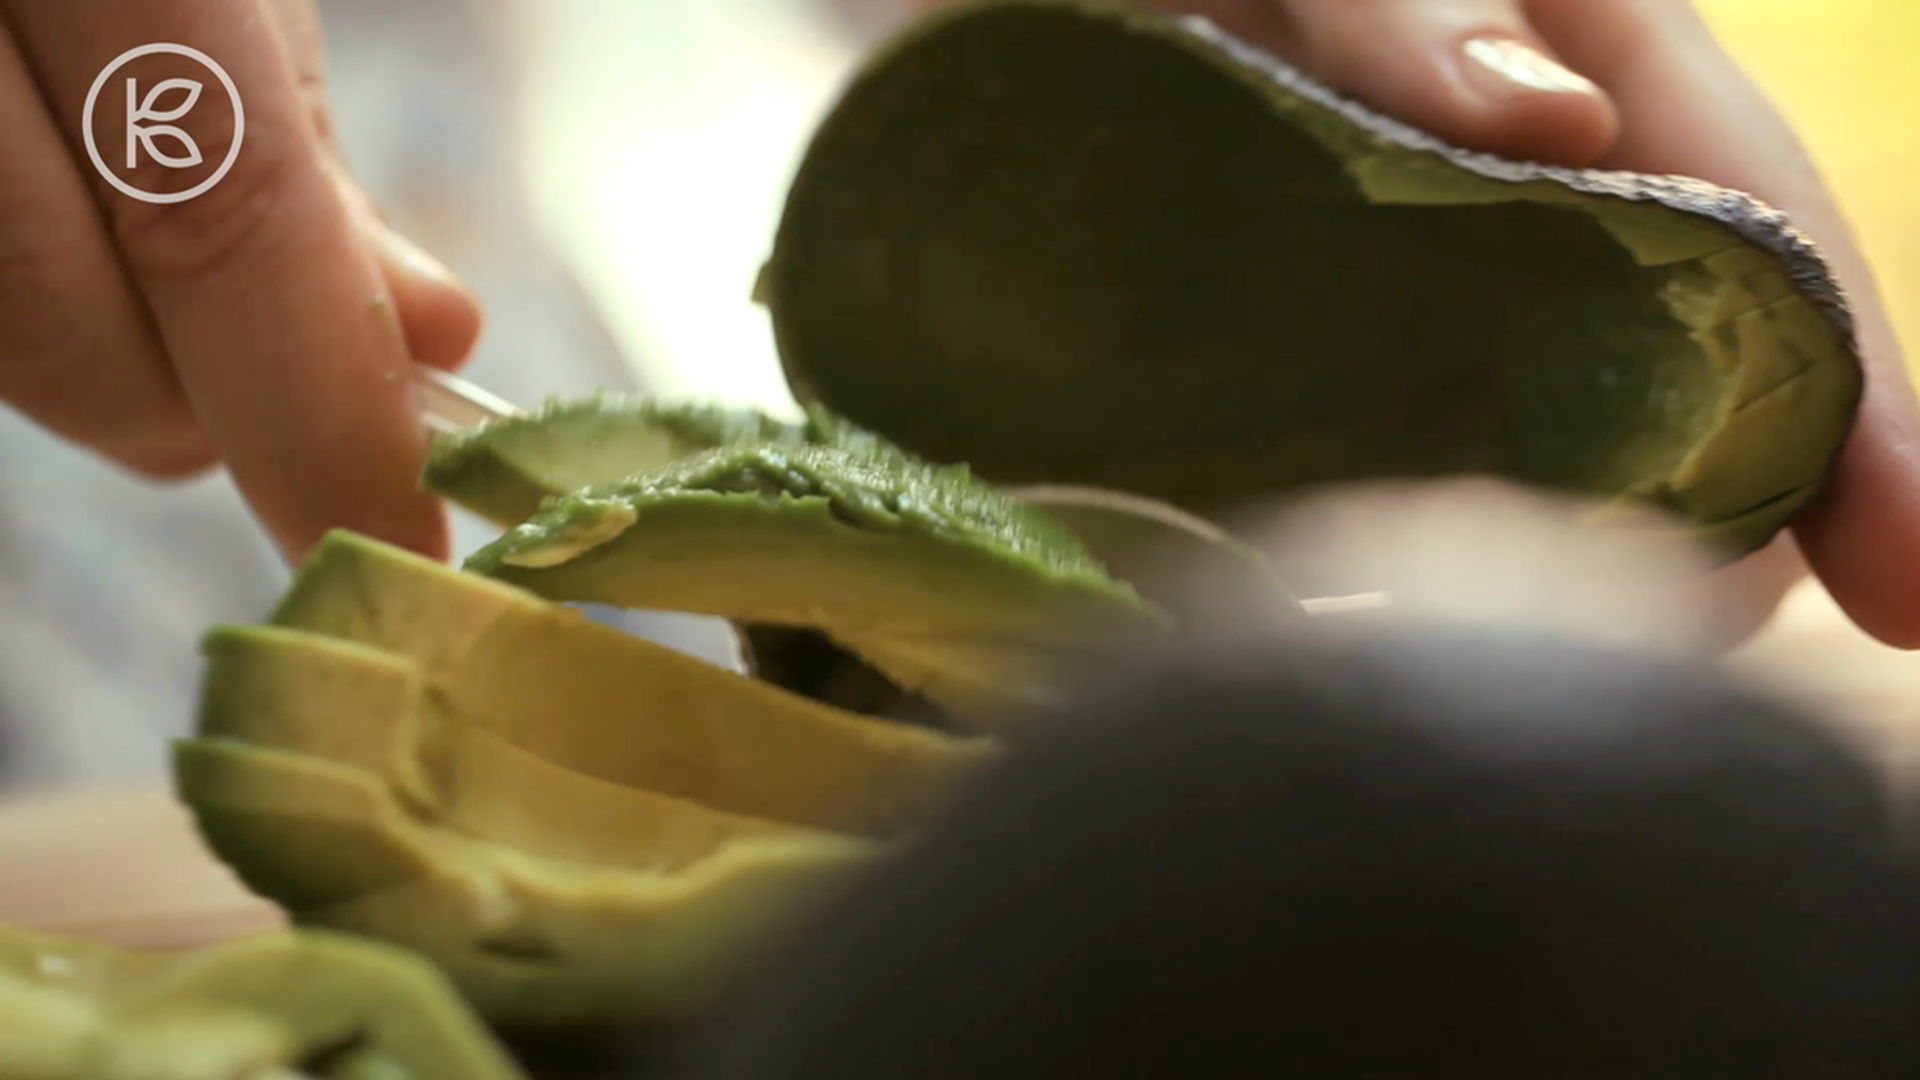 Sienna DeGovia shows you how to properly pit and slice a rich, creamy avocado.